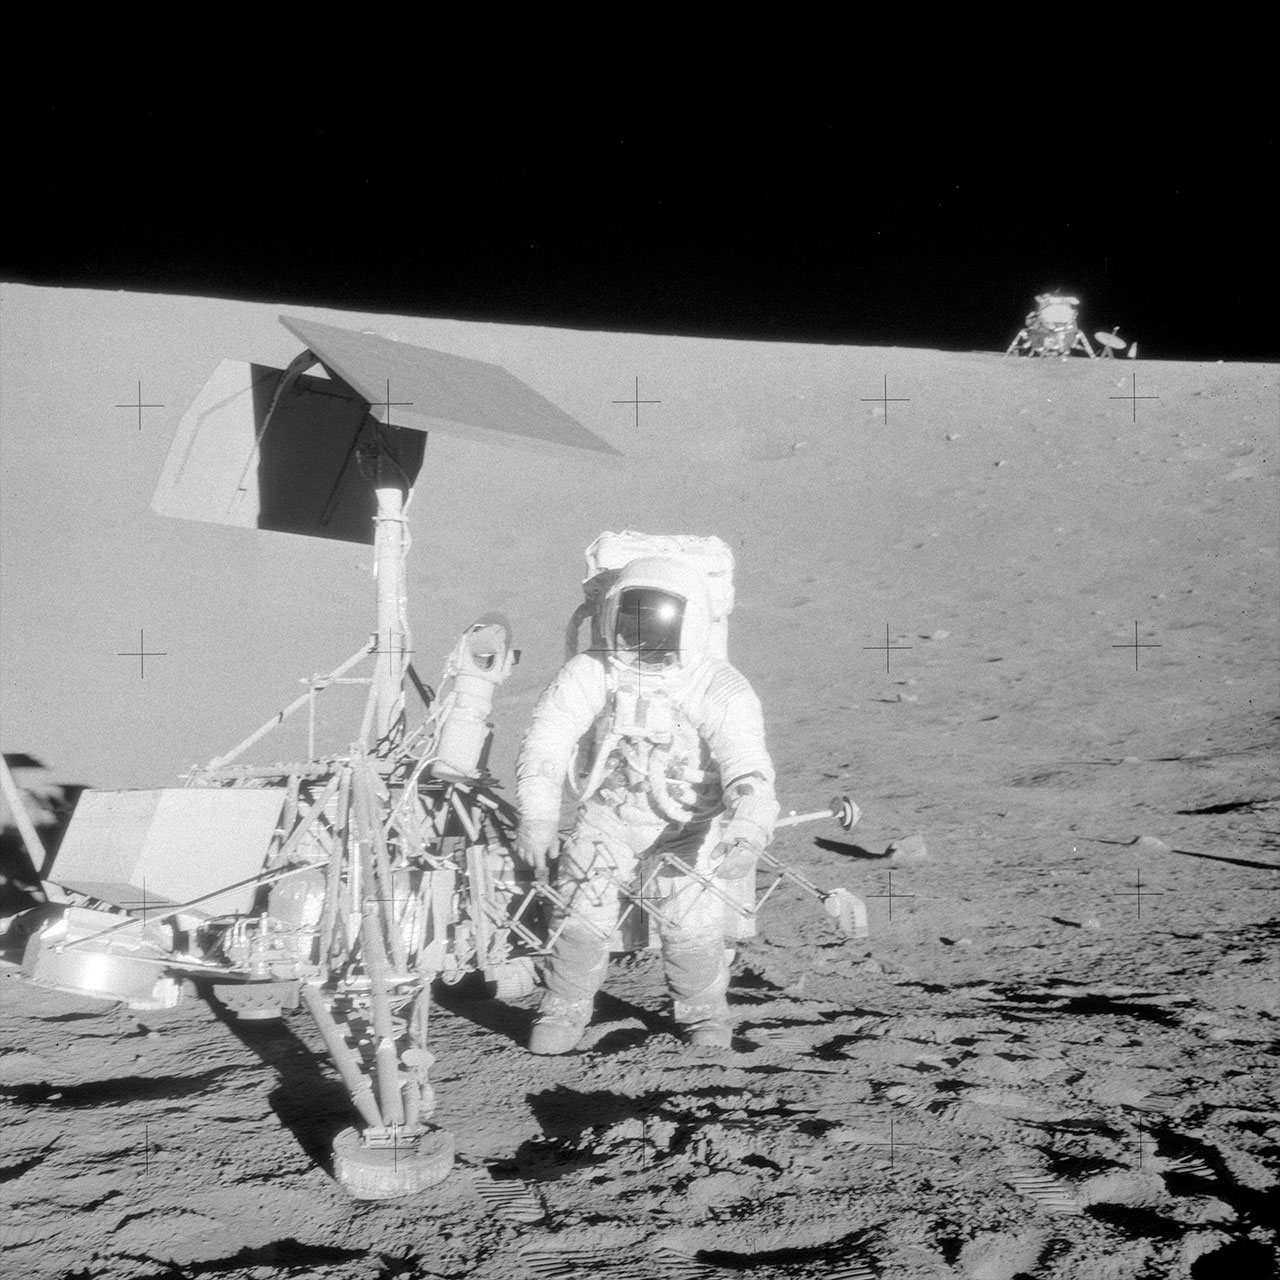 Astronaut Alan Bean, Apollo moonwalker-turned-artist, dies at 86 | collectSPACE1280 x 1280